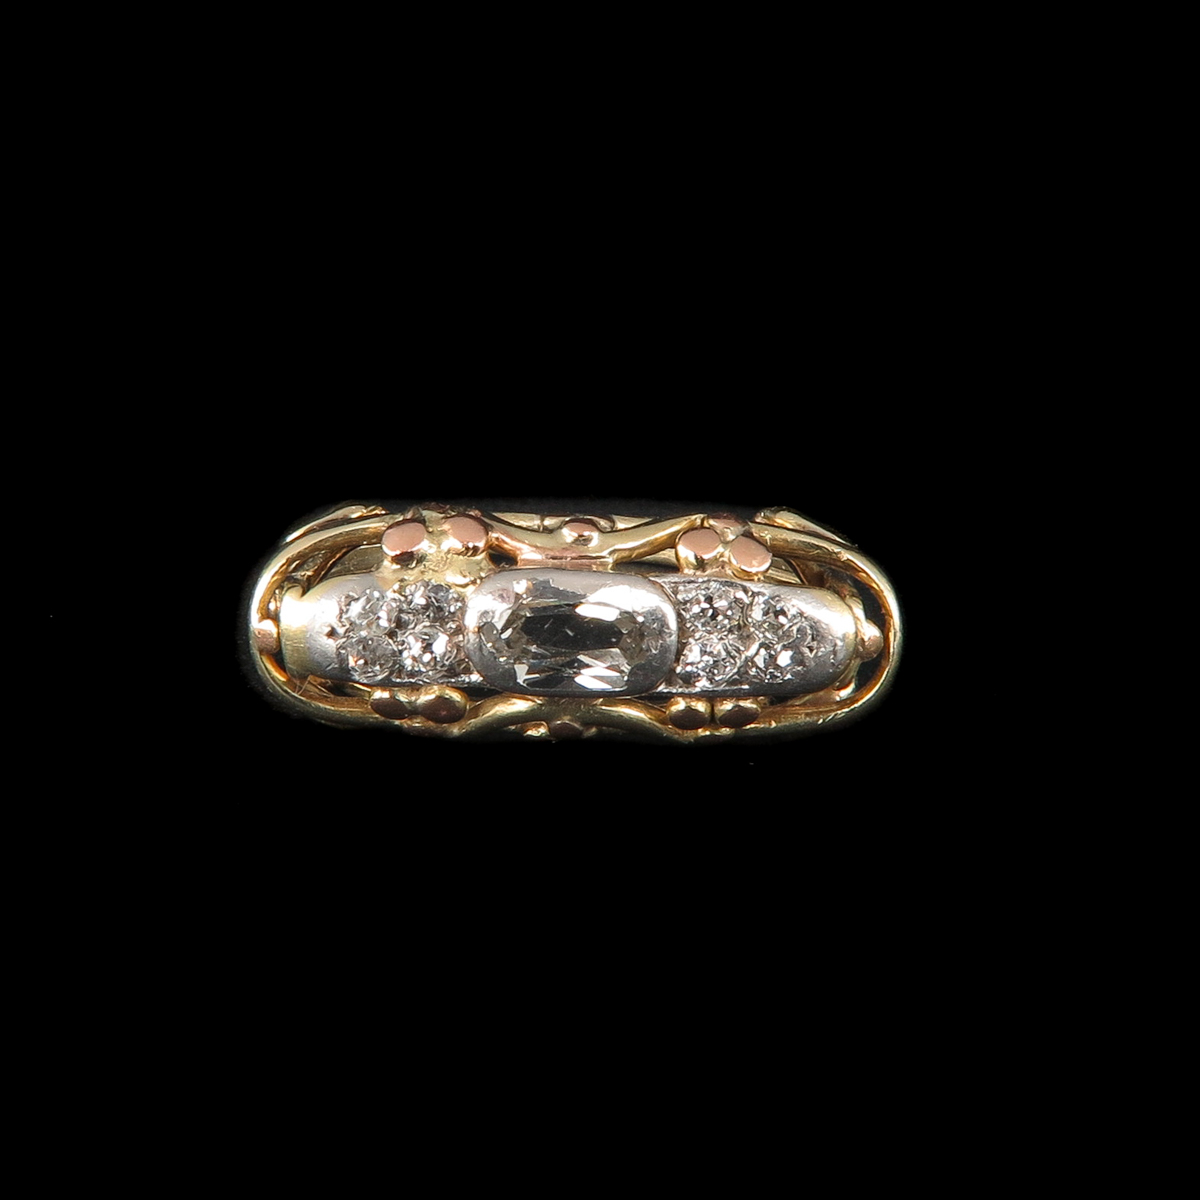 A Ladies Art Deco Diamond Ring - Image 2 of 3